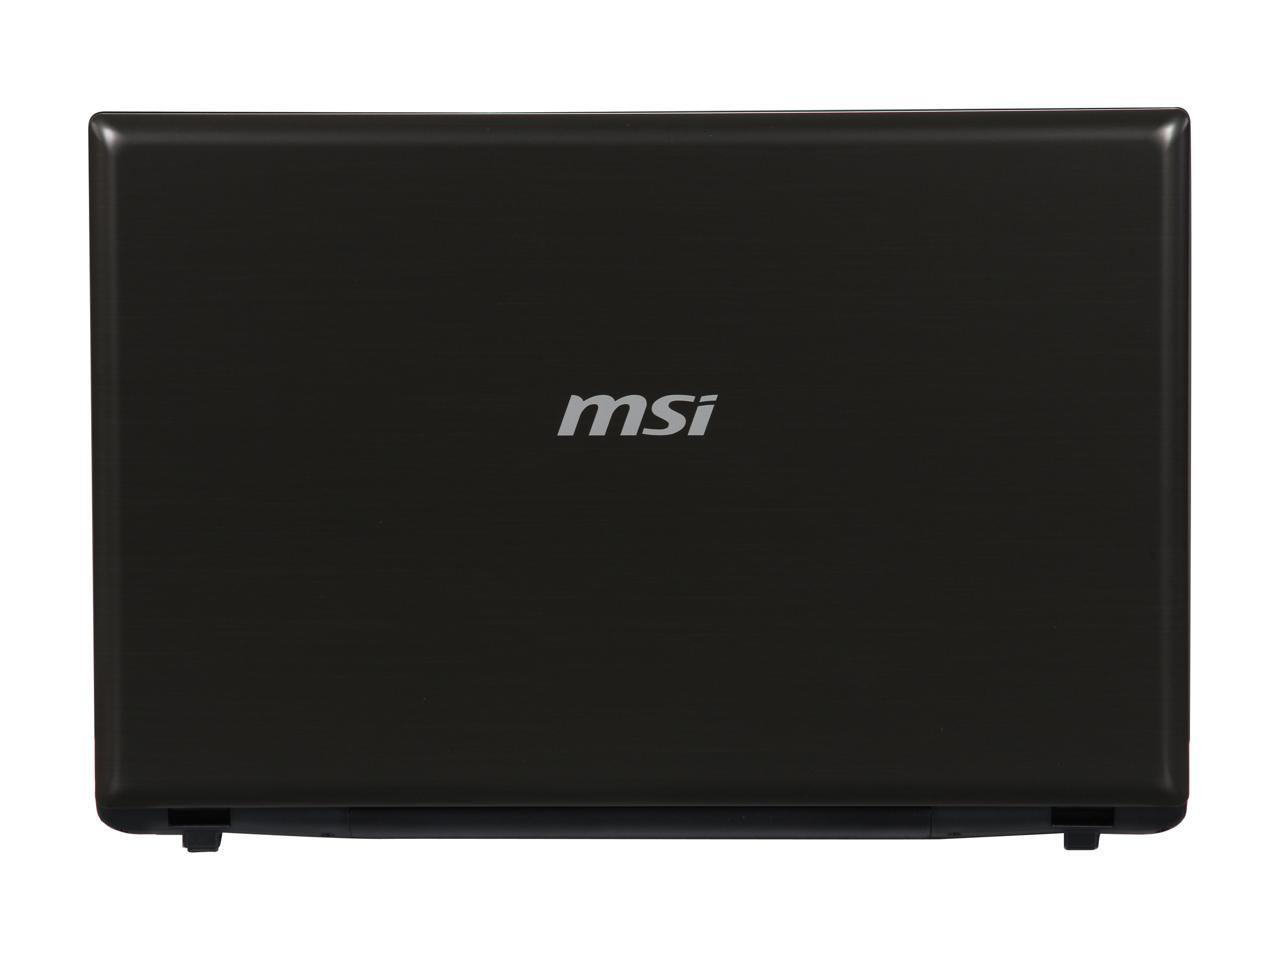 Open Box: MSI CX61 2PC-499US Gaming Laptop Intel Core i5-4200M 2.5